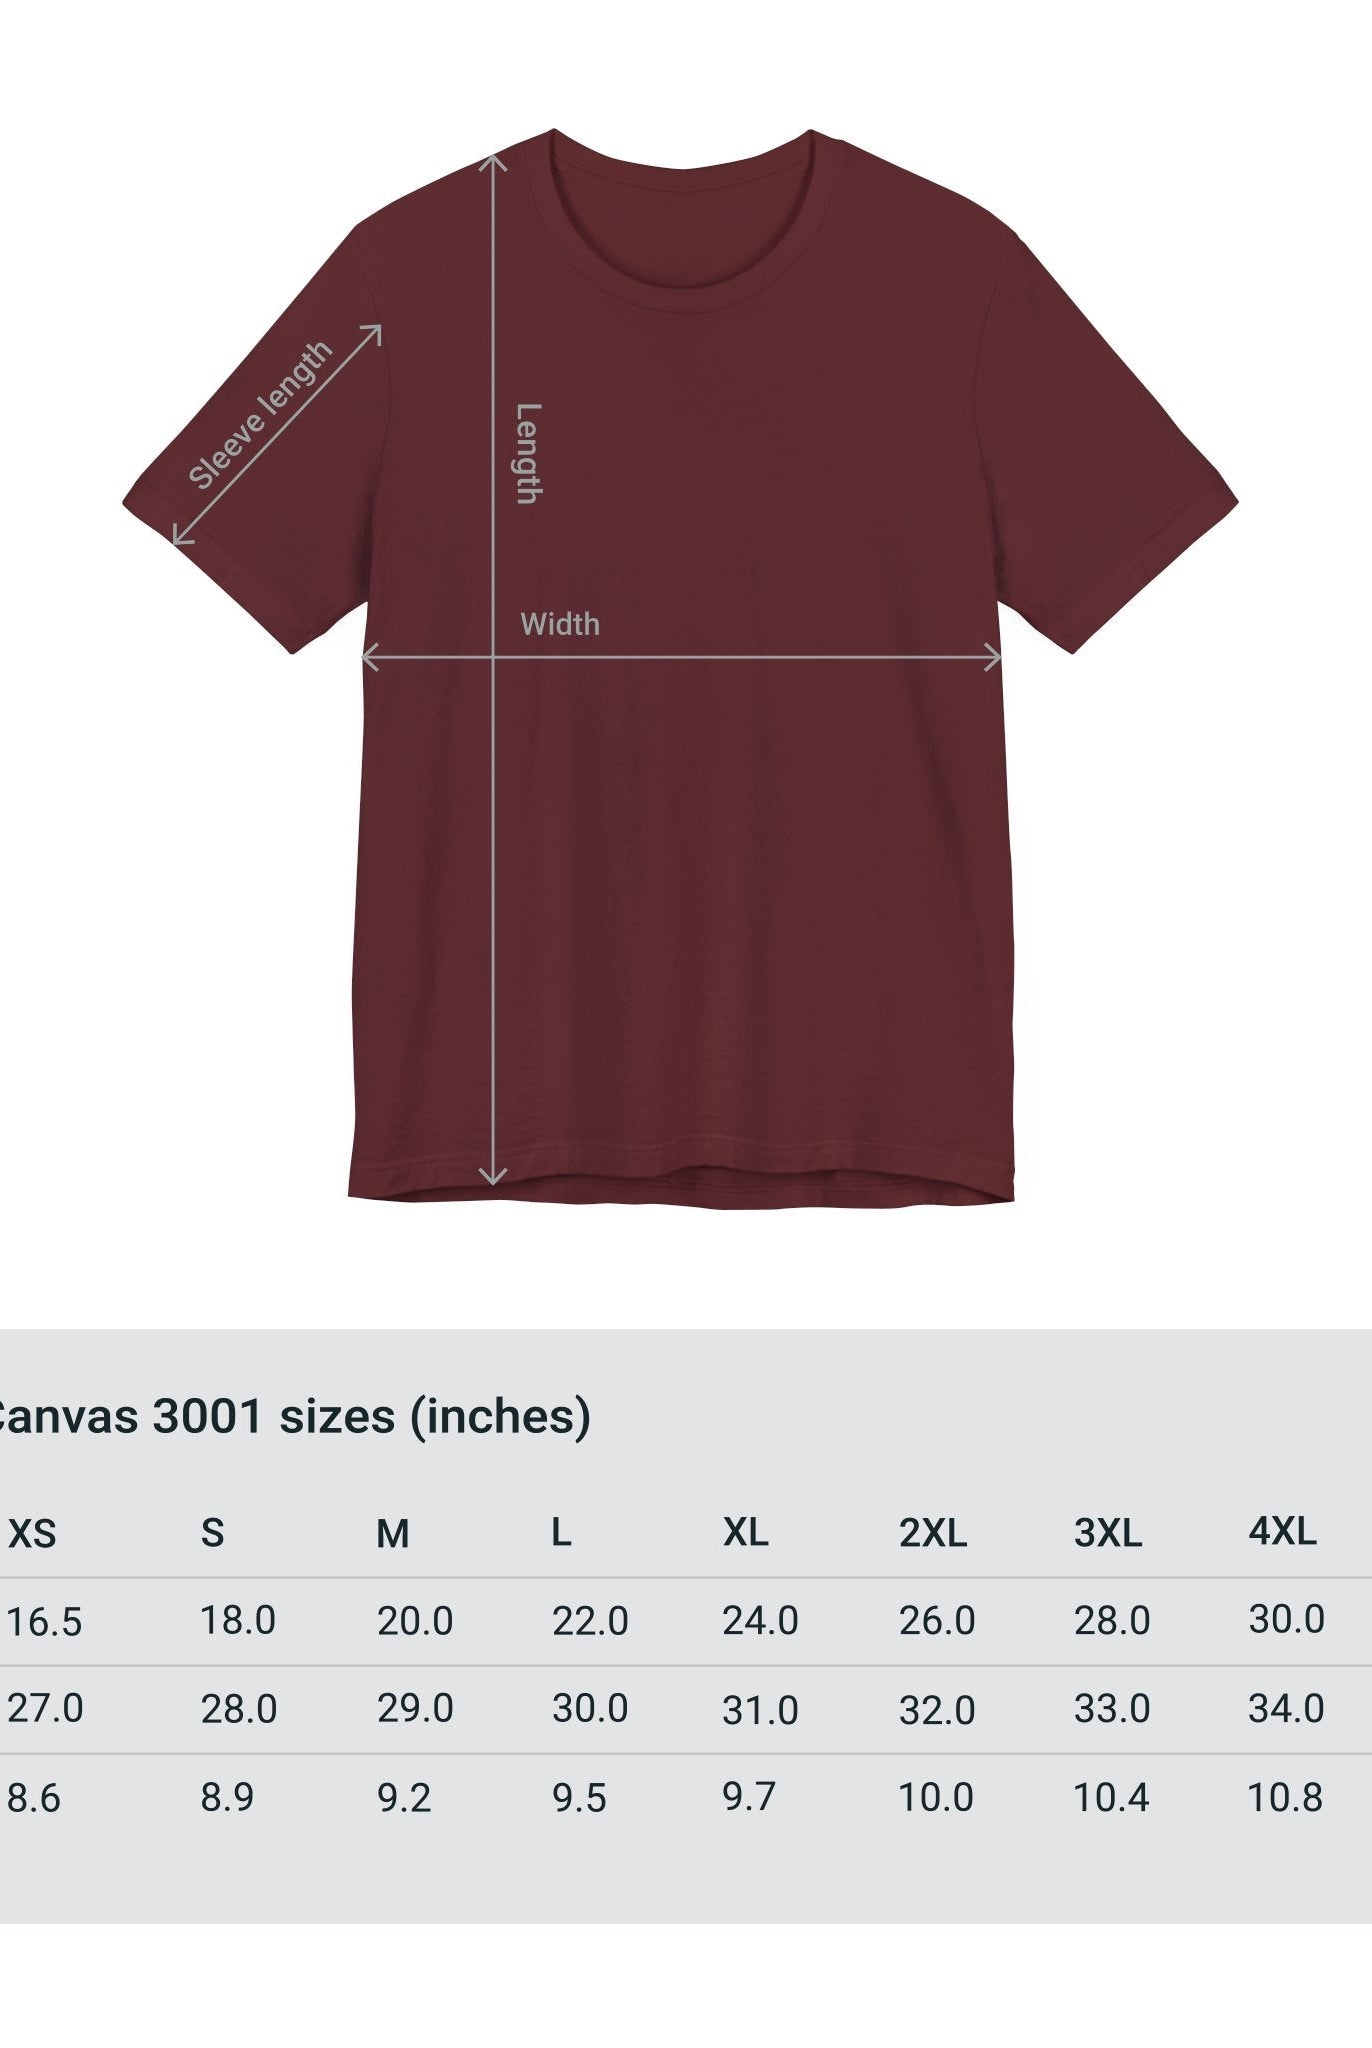 Adventure Unlimited Surfing T-Shirt size measurements displayed - Soulshinecreators - Bella & Canvas EU - Direct-to-garment printed item